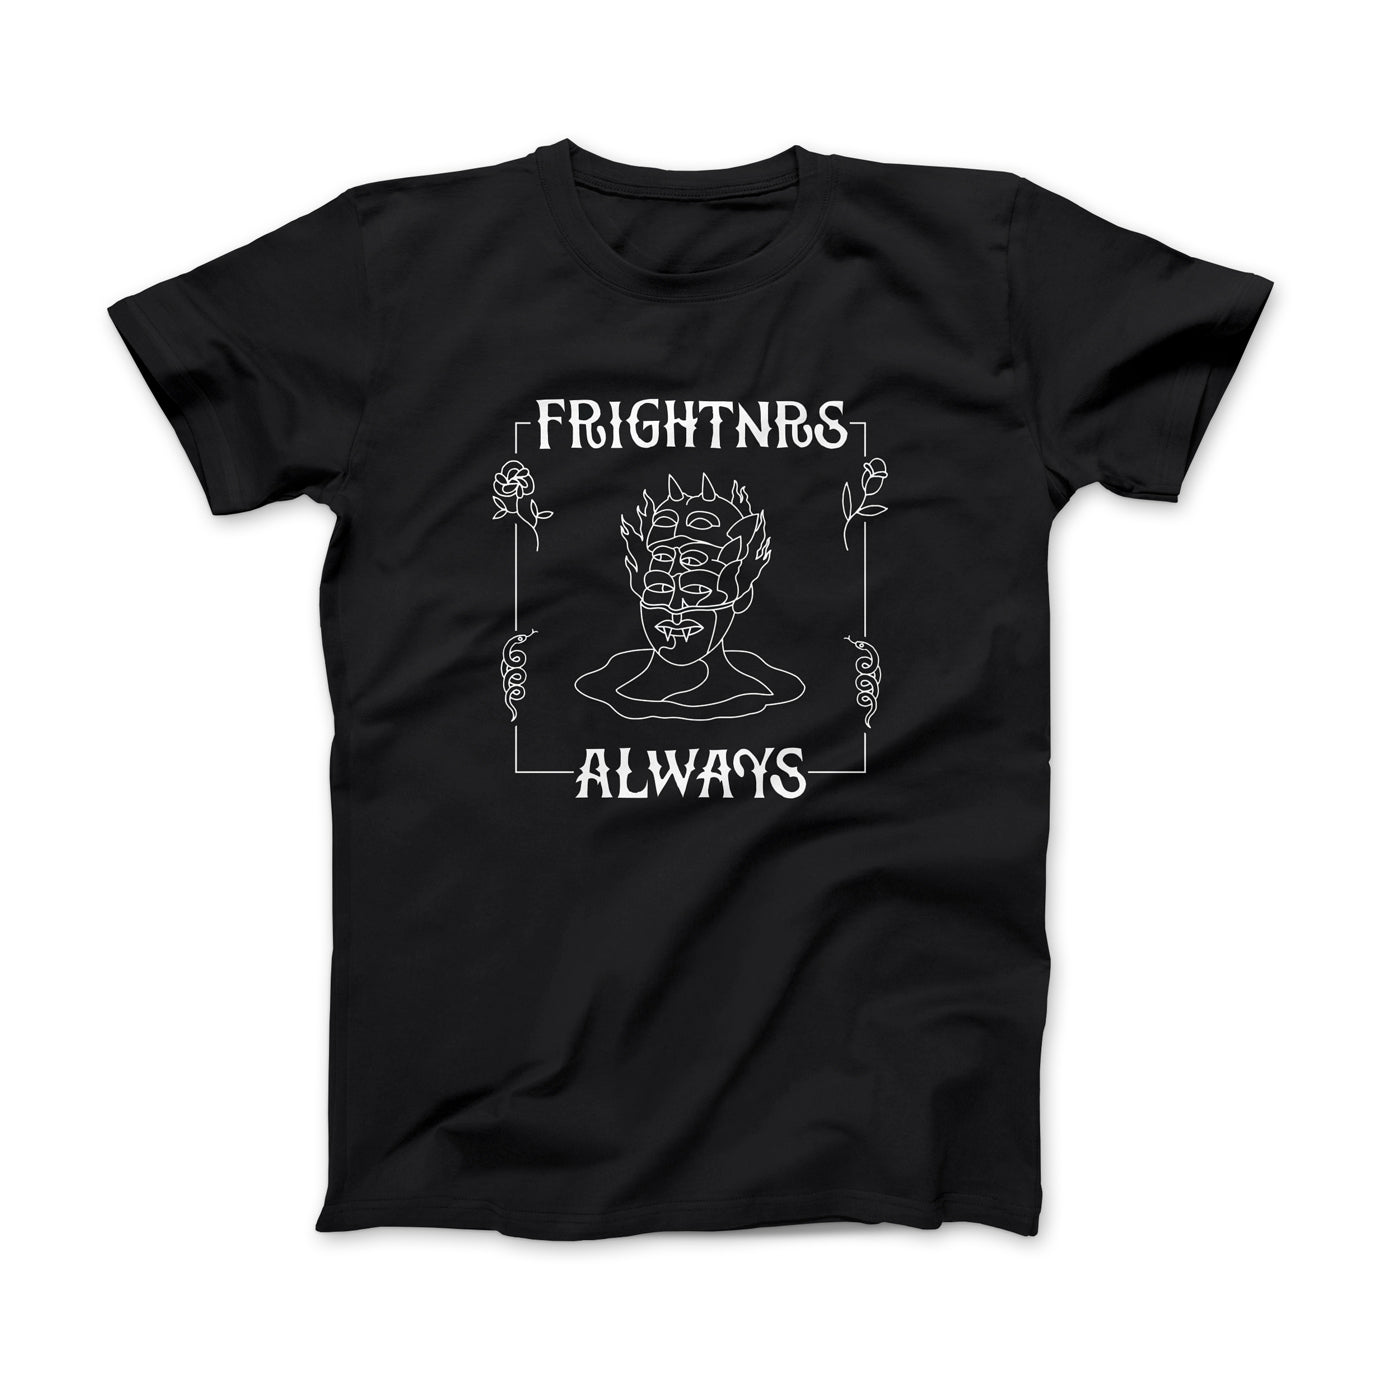 The Frightnrs "Always" Tshirt